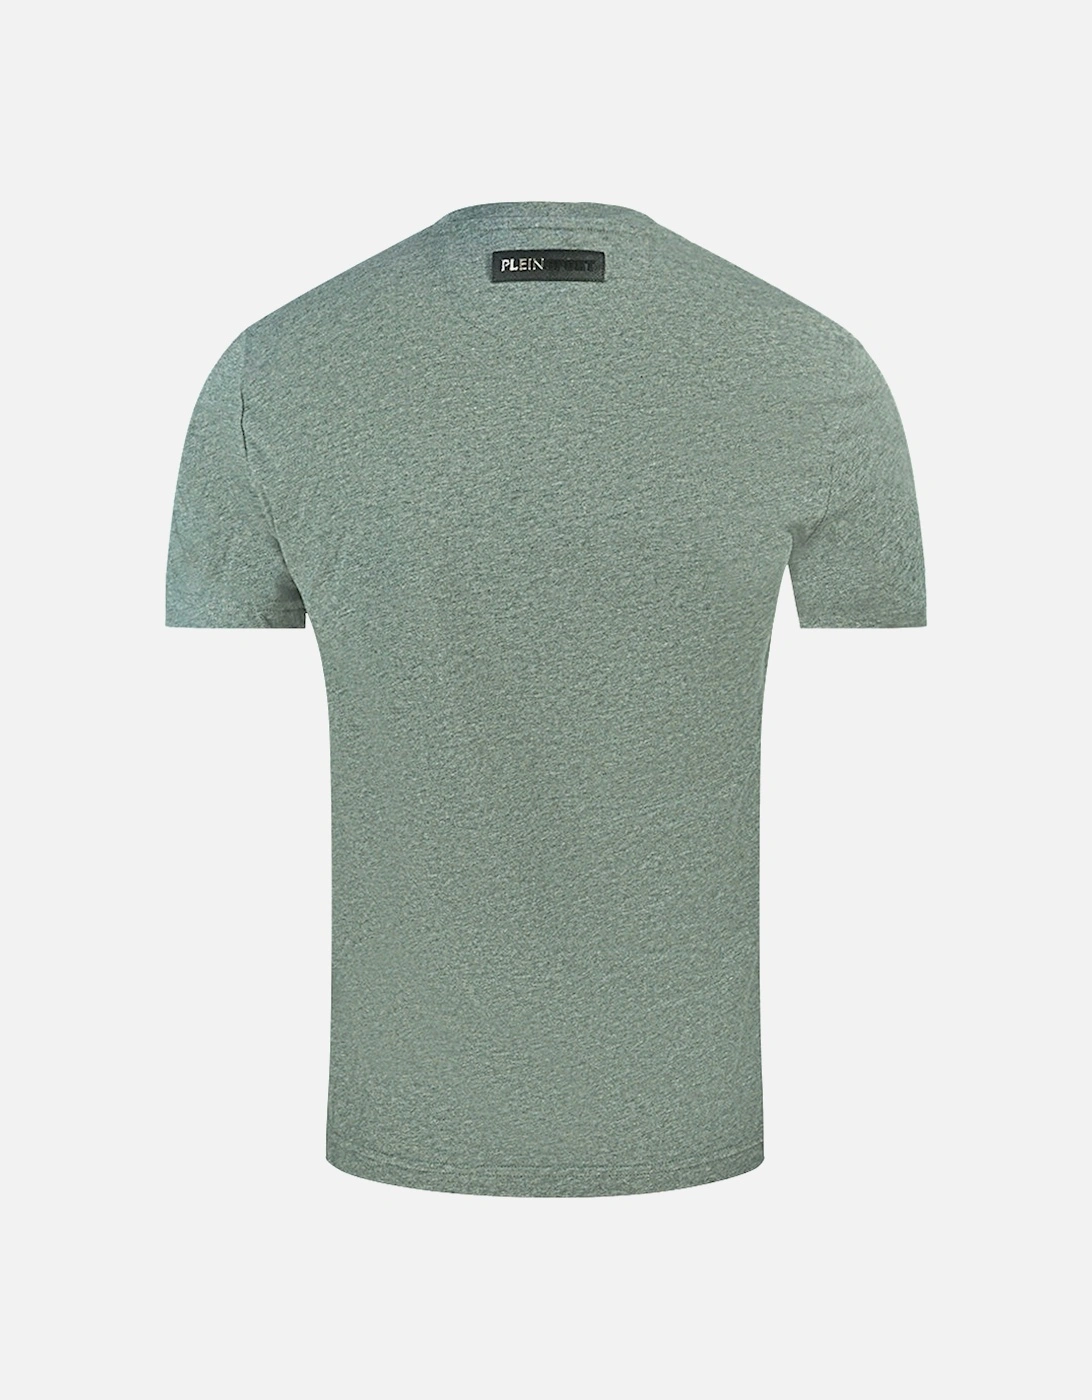 Plein Sport Bold Split Logo Grey T-Shirt